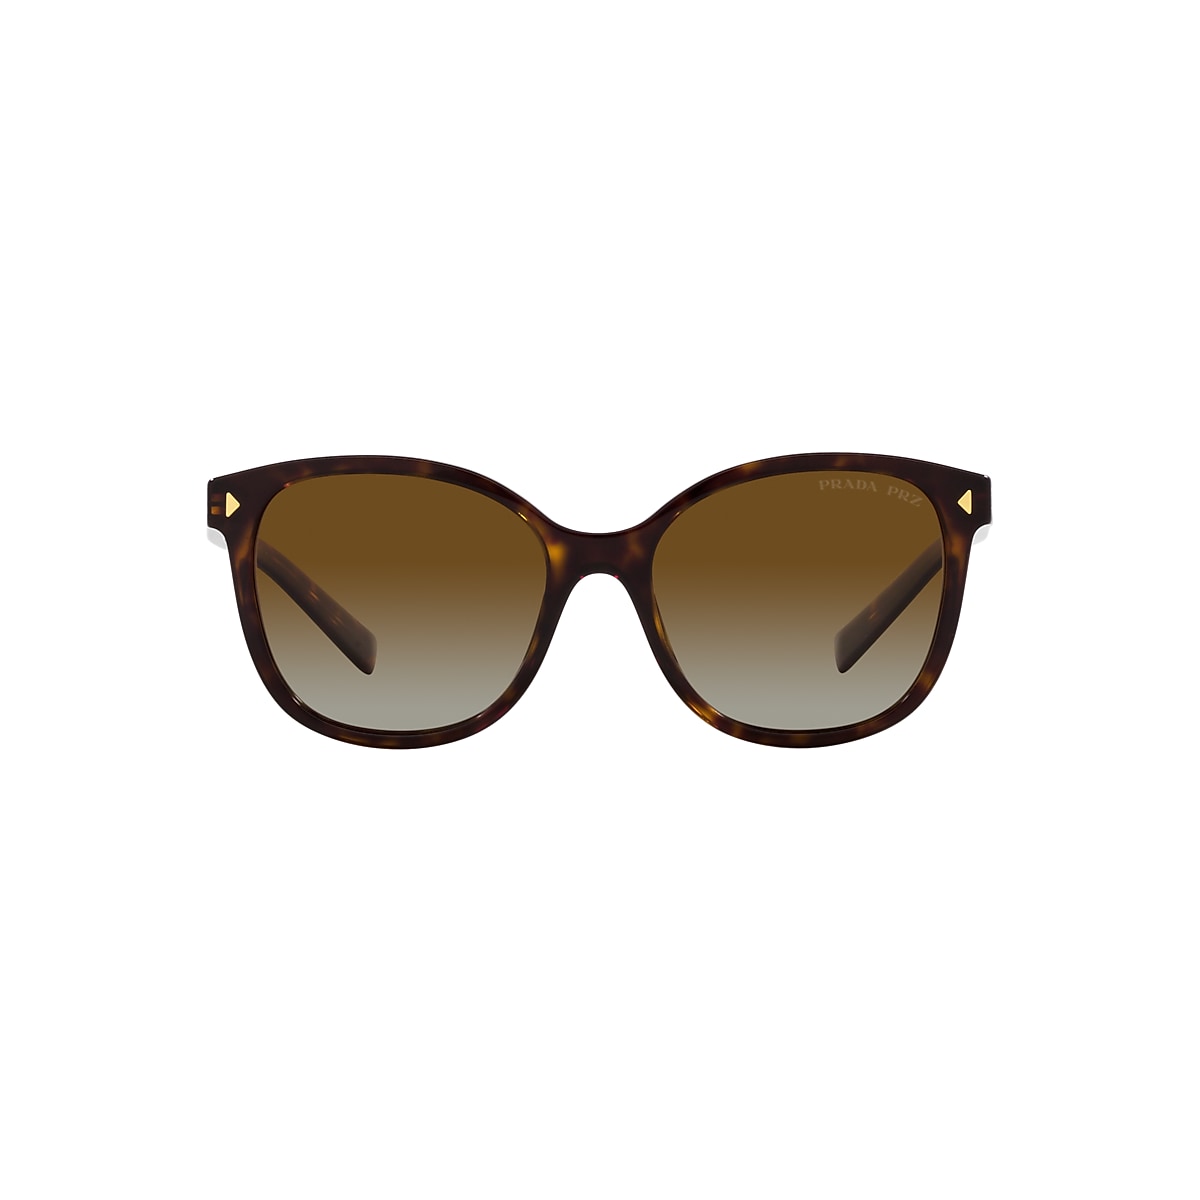 PRADA PR 22ZS Tortoise - Women Luxury Sunglasses, Polar Brown Gradient Lens